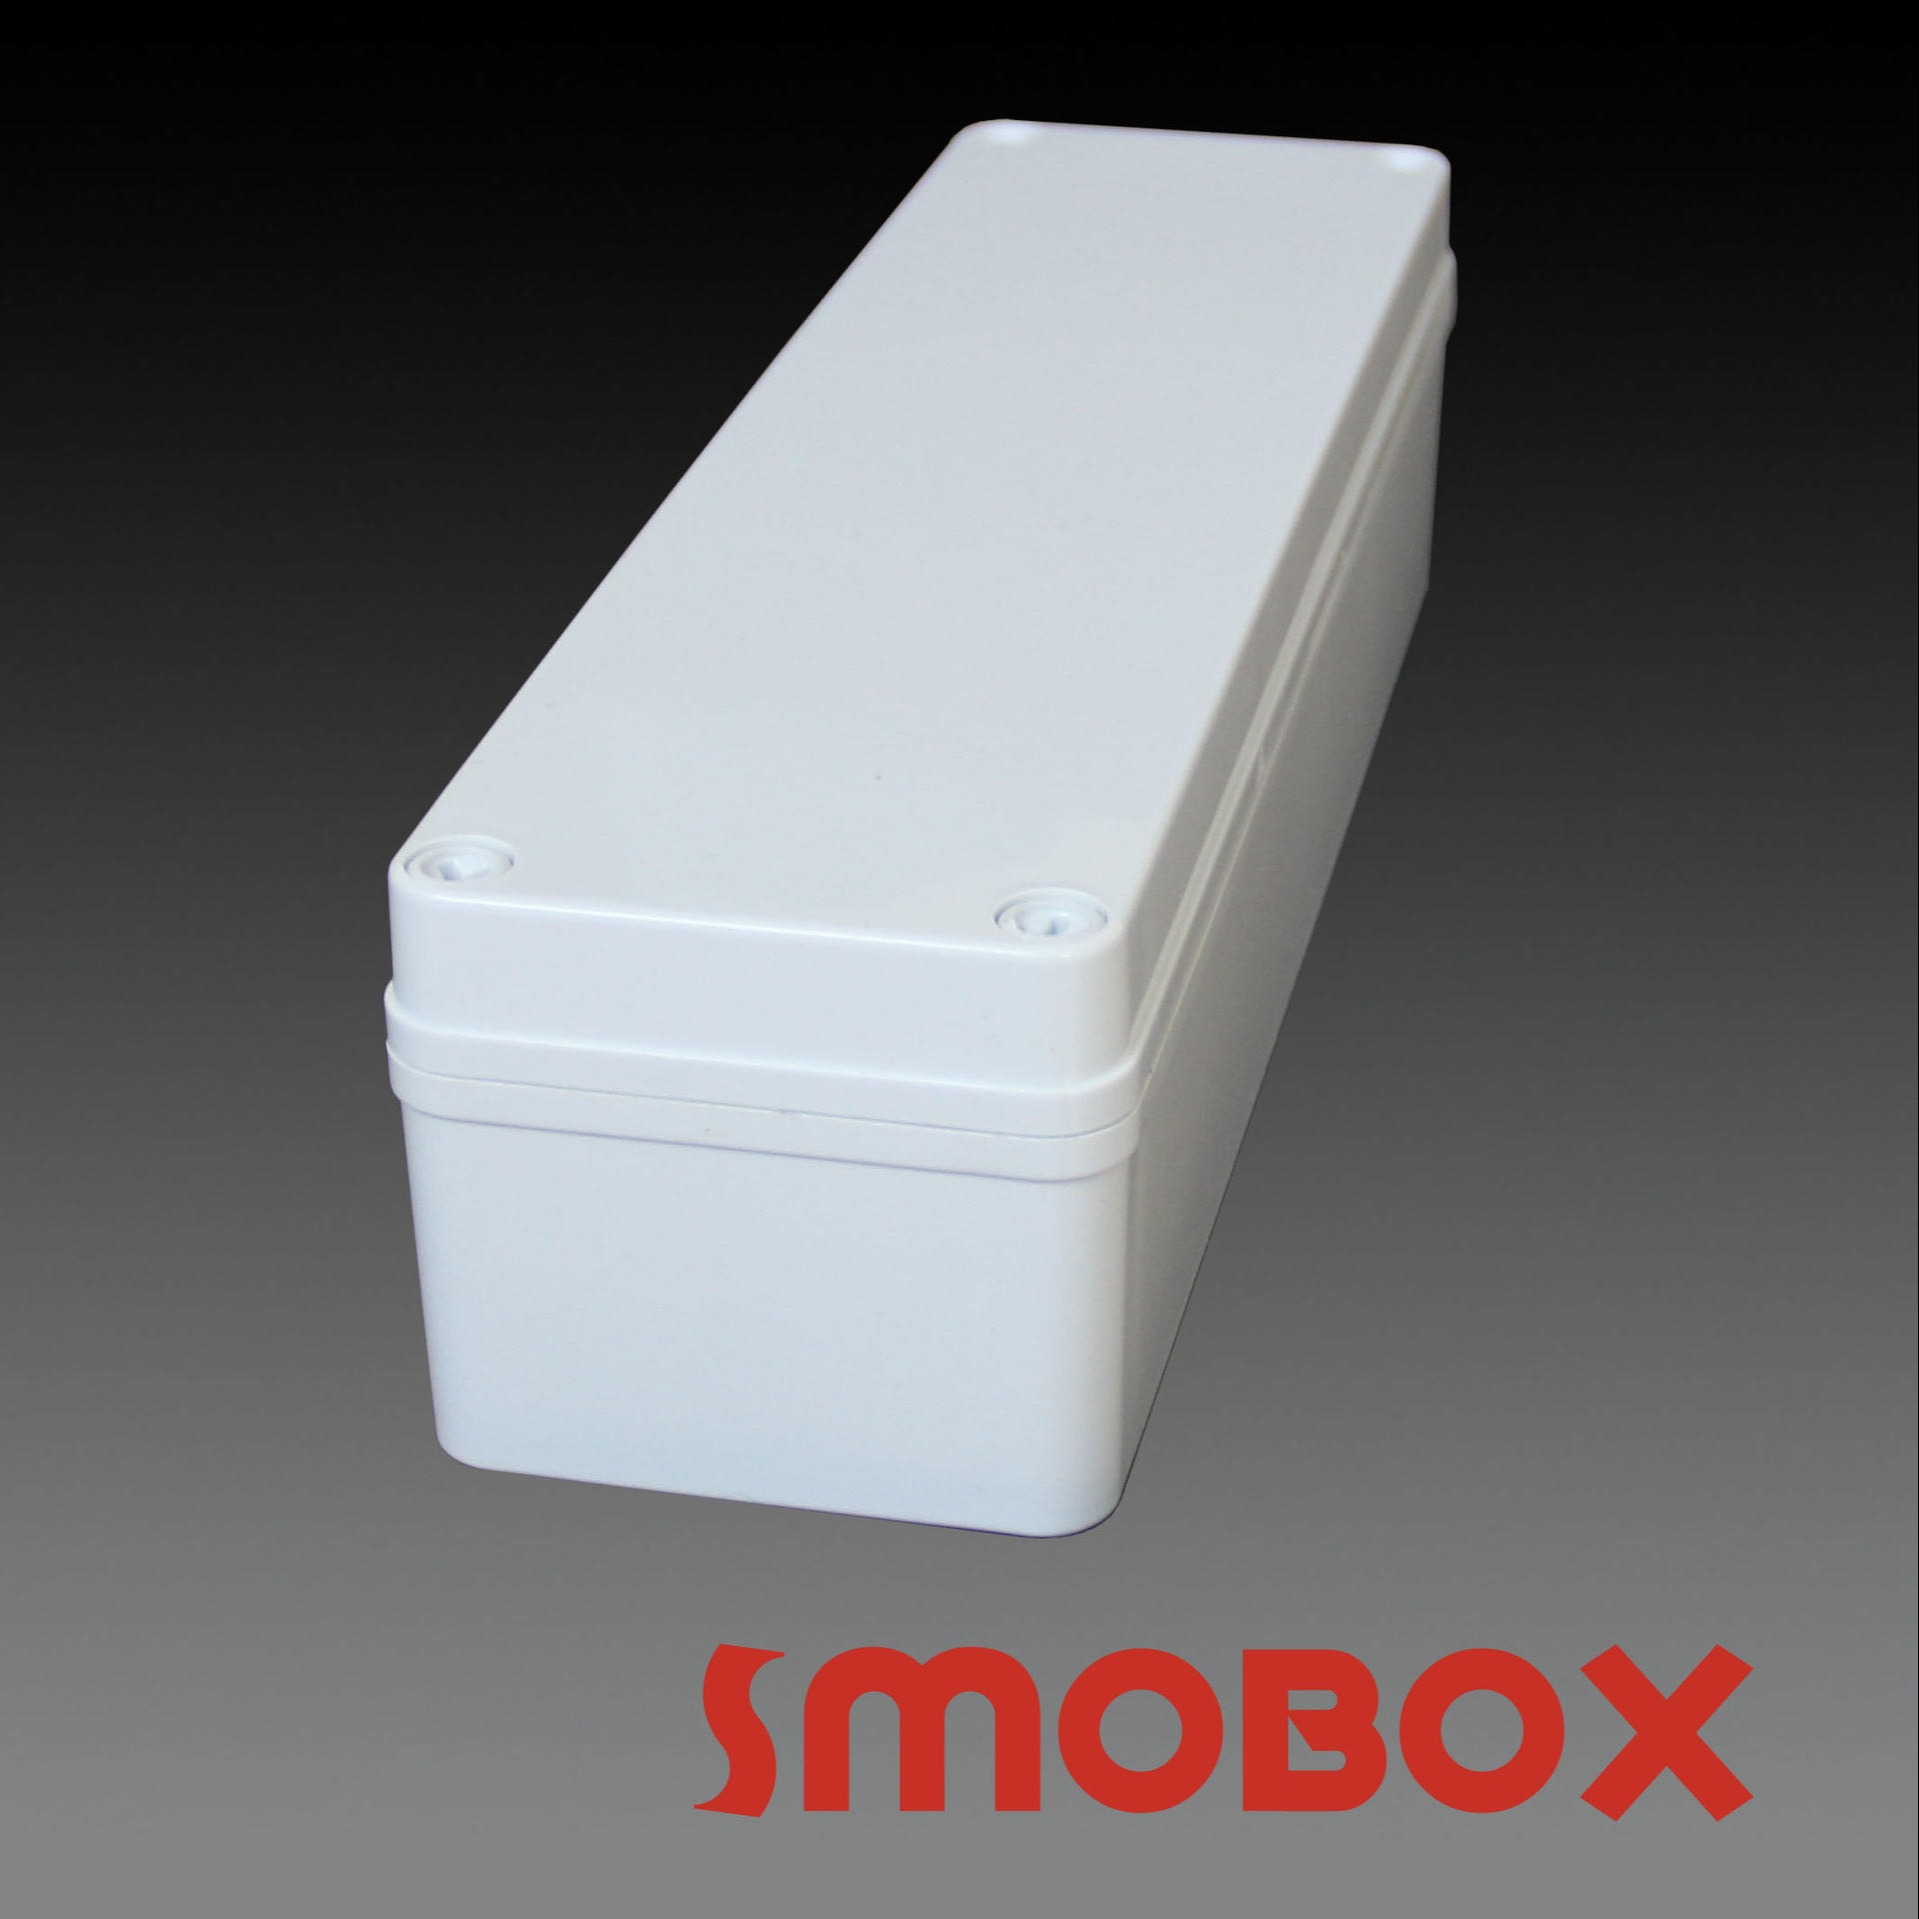 SMOBOX电气密封箱80 280 70 螺钉 电气密封箱 防水控制箱 接线盒外壳 IP65防尘防潮 厂家直销